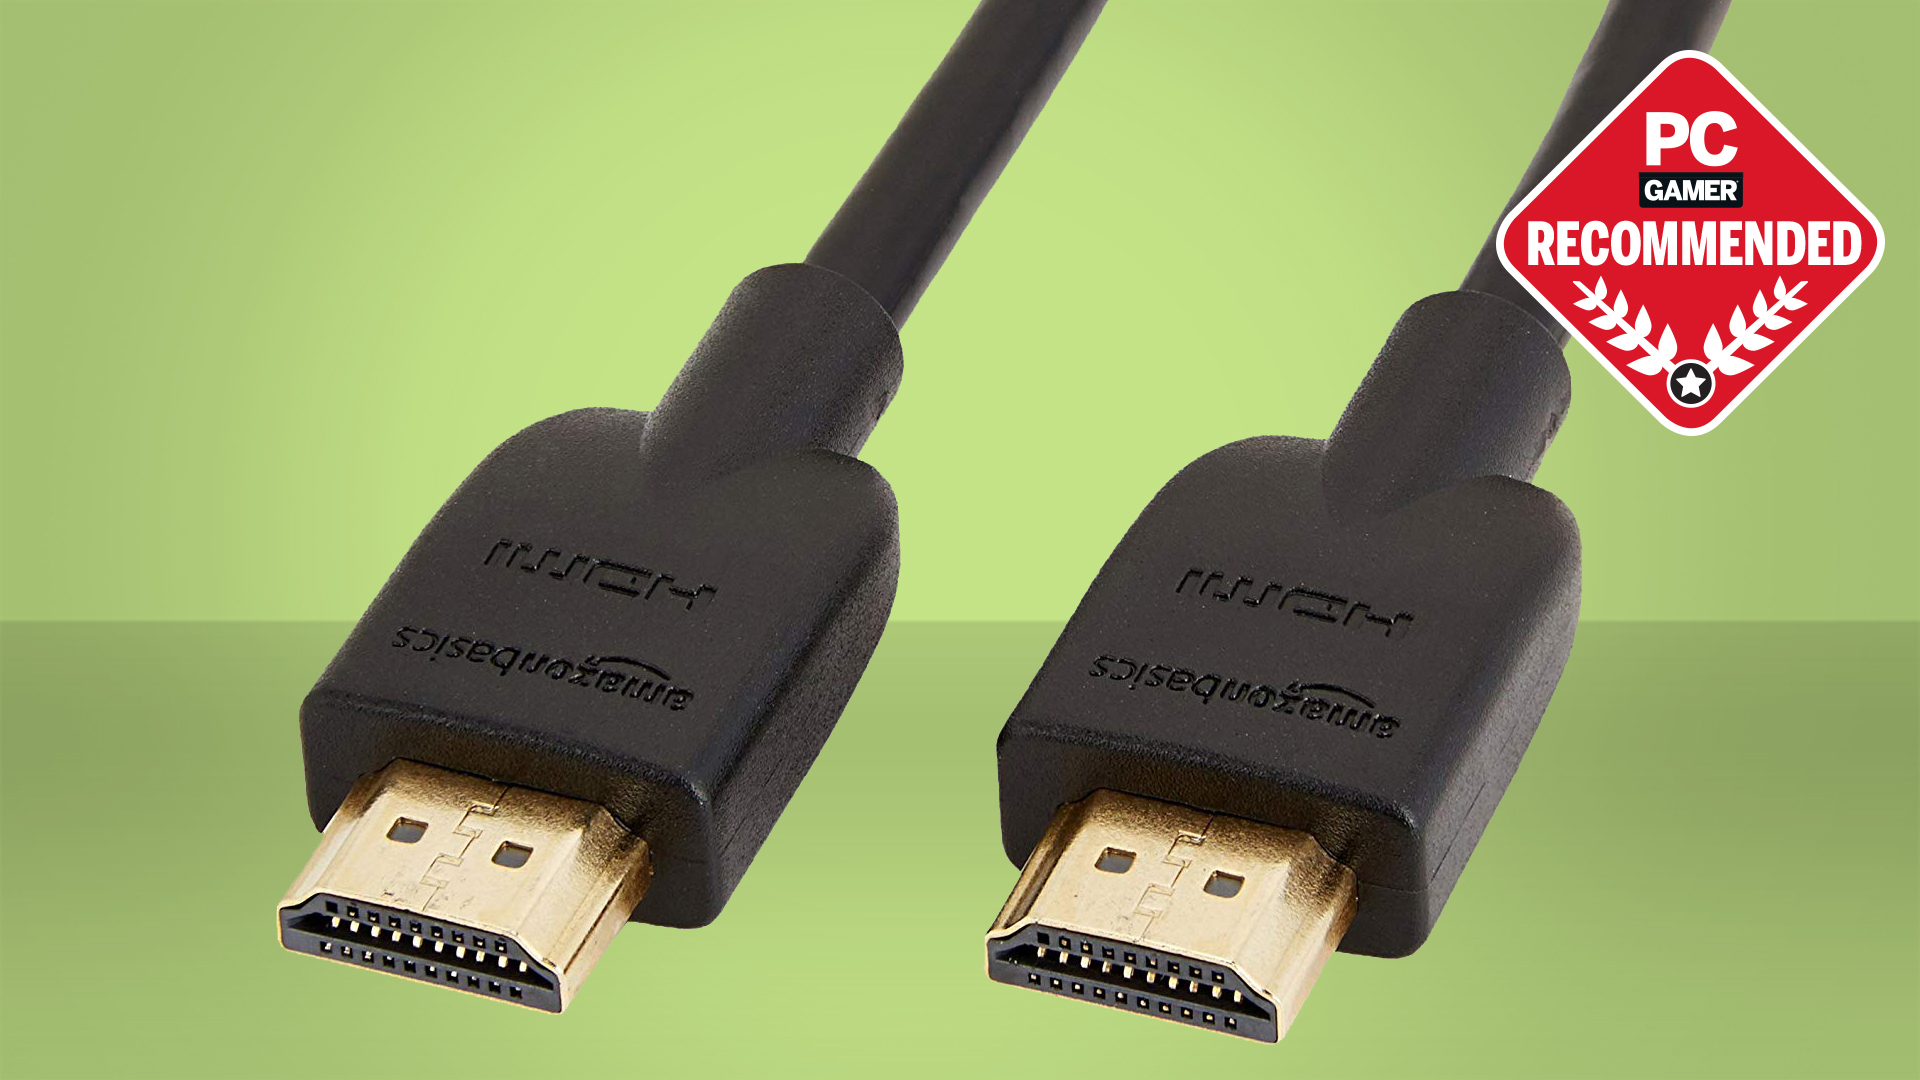 Meget orkester længde The best HDMI cable for gaming on PC in 2021 | PC Gamer